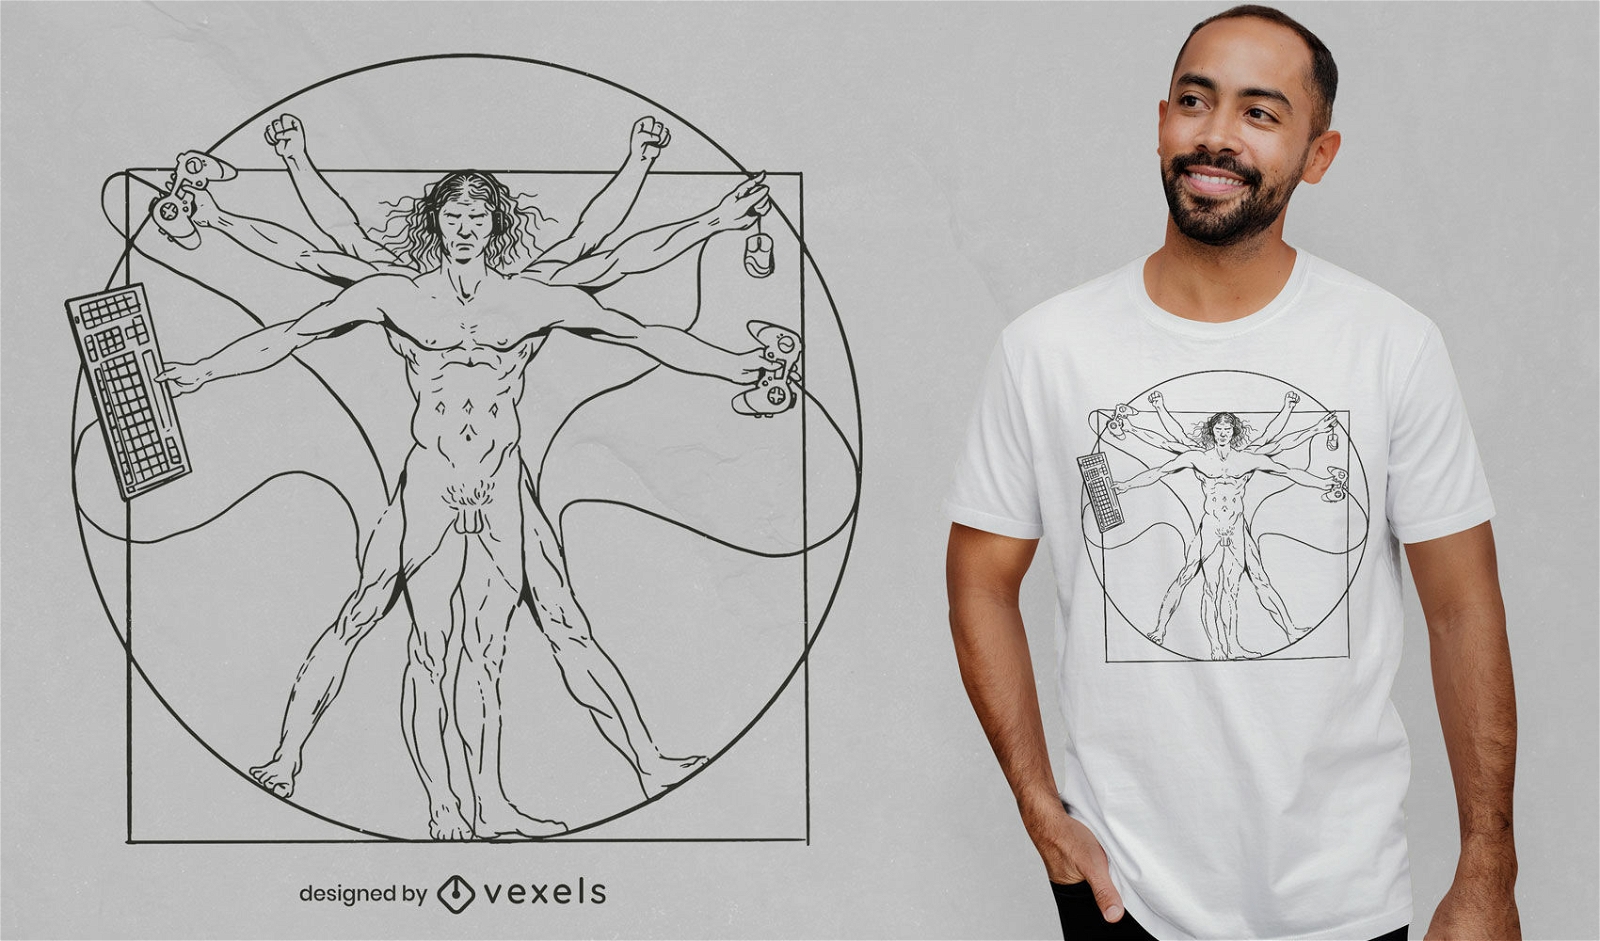 Vitrubian man playing videogames t-shirt design